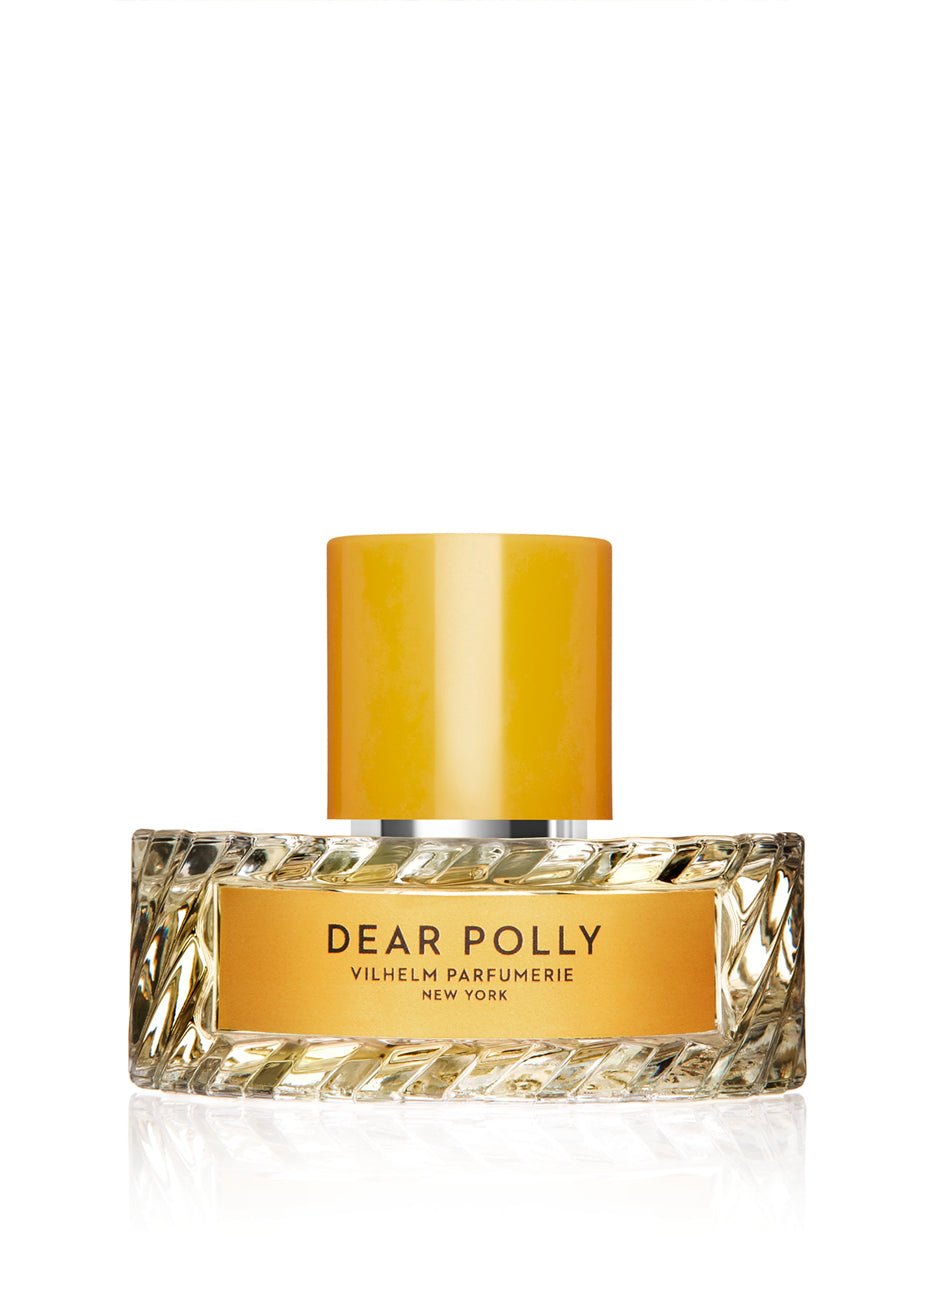 Vilhelm Parfumerie Dear Polly Eau De Parfum 50ml